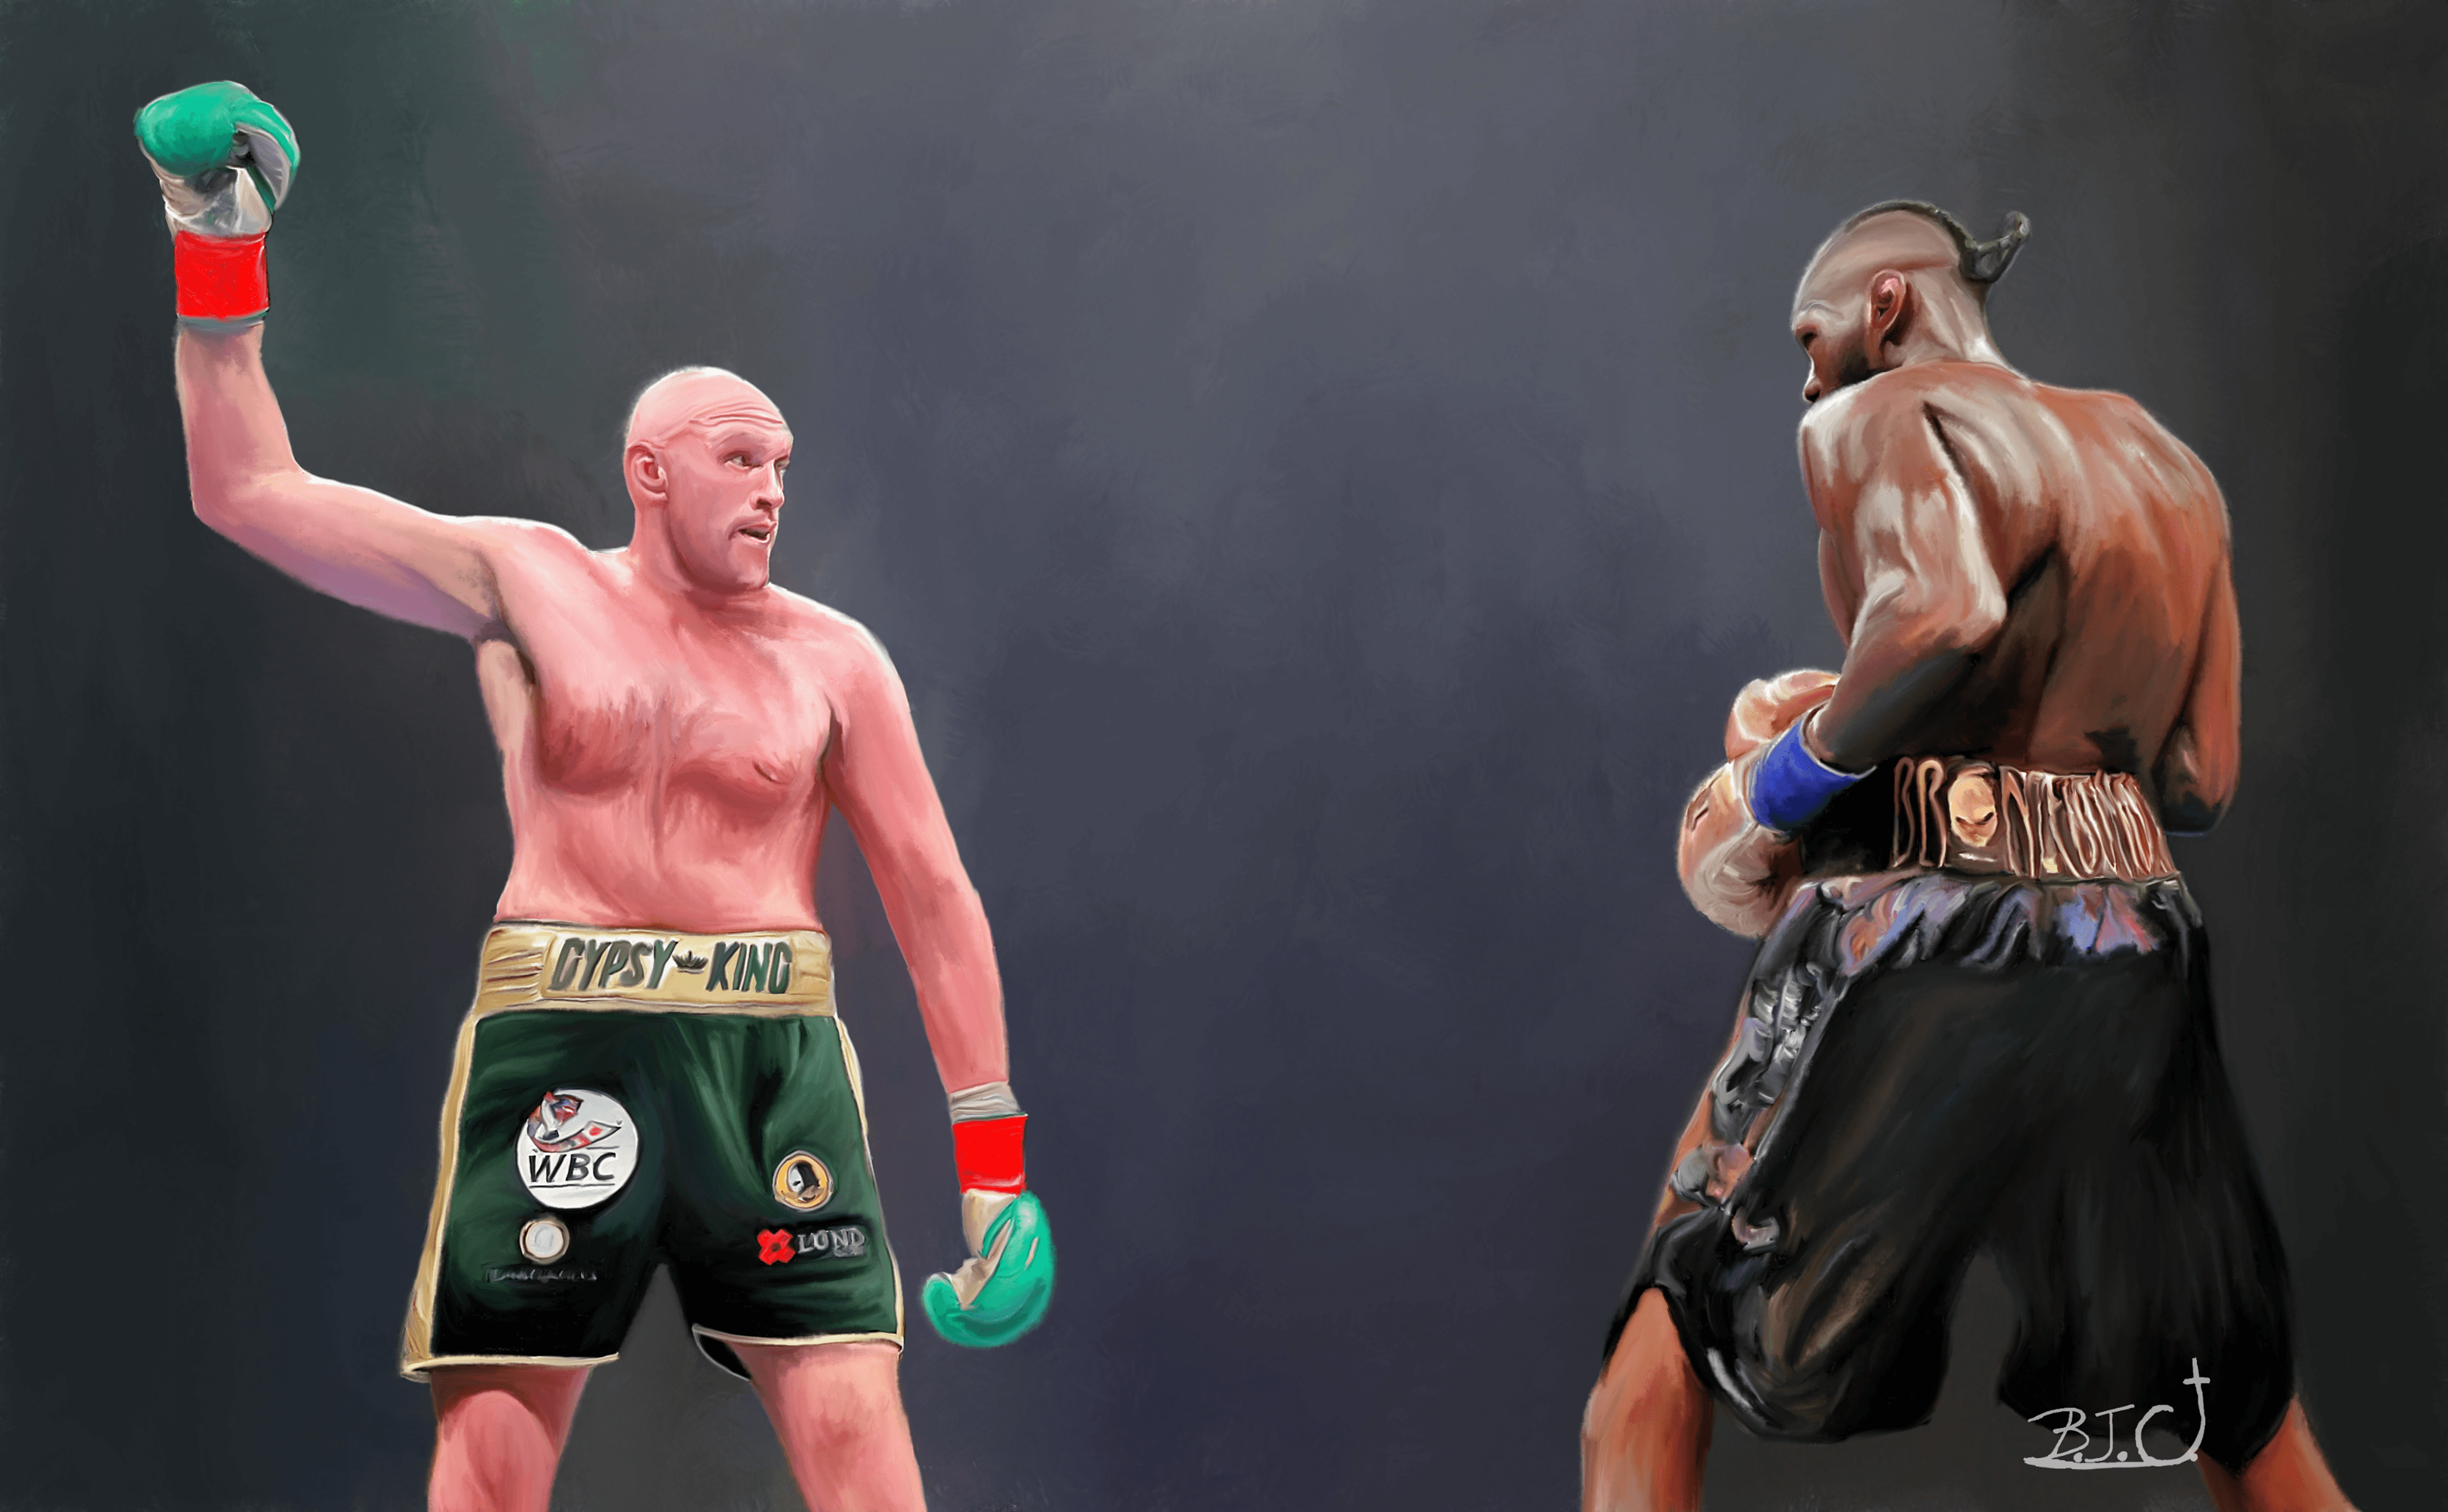  Trbute to Boxing Champion Tyson Fury vs. Deontay Wilder - Gypsy King vs. Bronze Bomber